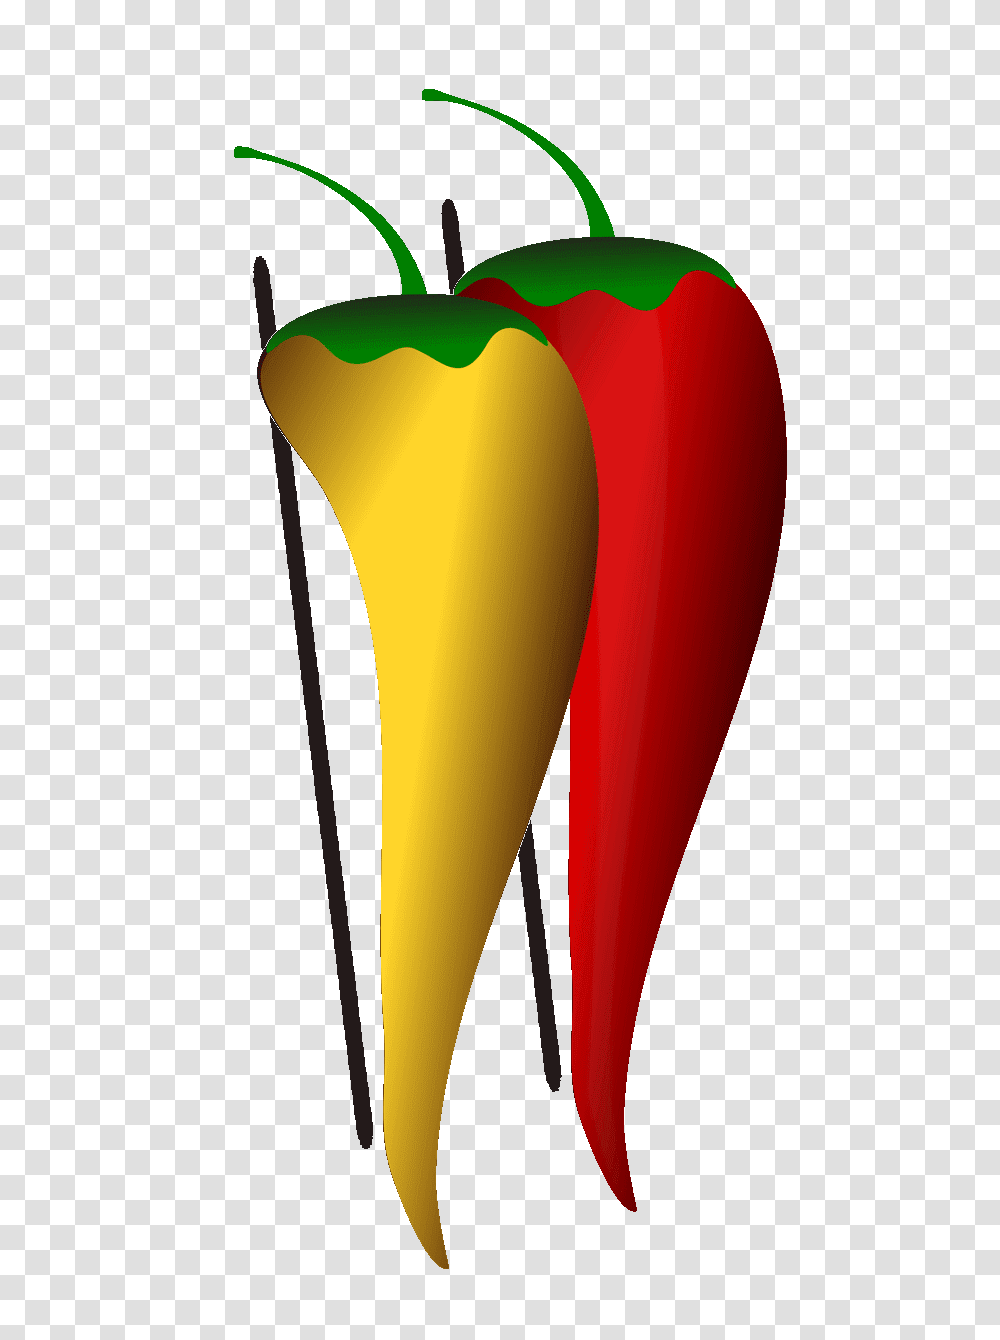 Chili Pepper Free Chili Clip Art Pictures Clipartandscrap, Plant, Dynamite, Bomb, Weapon Transparent Png